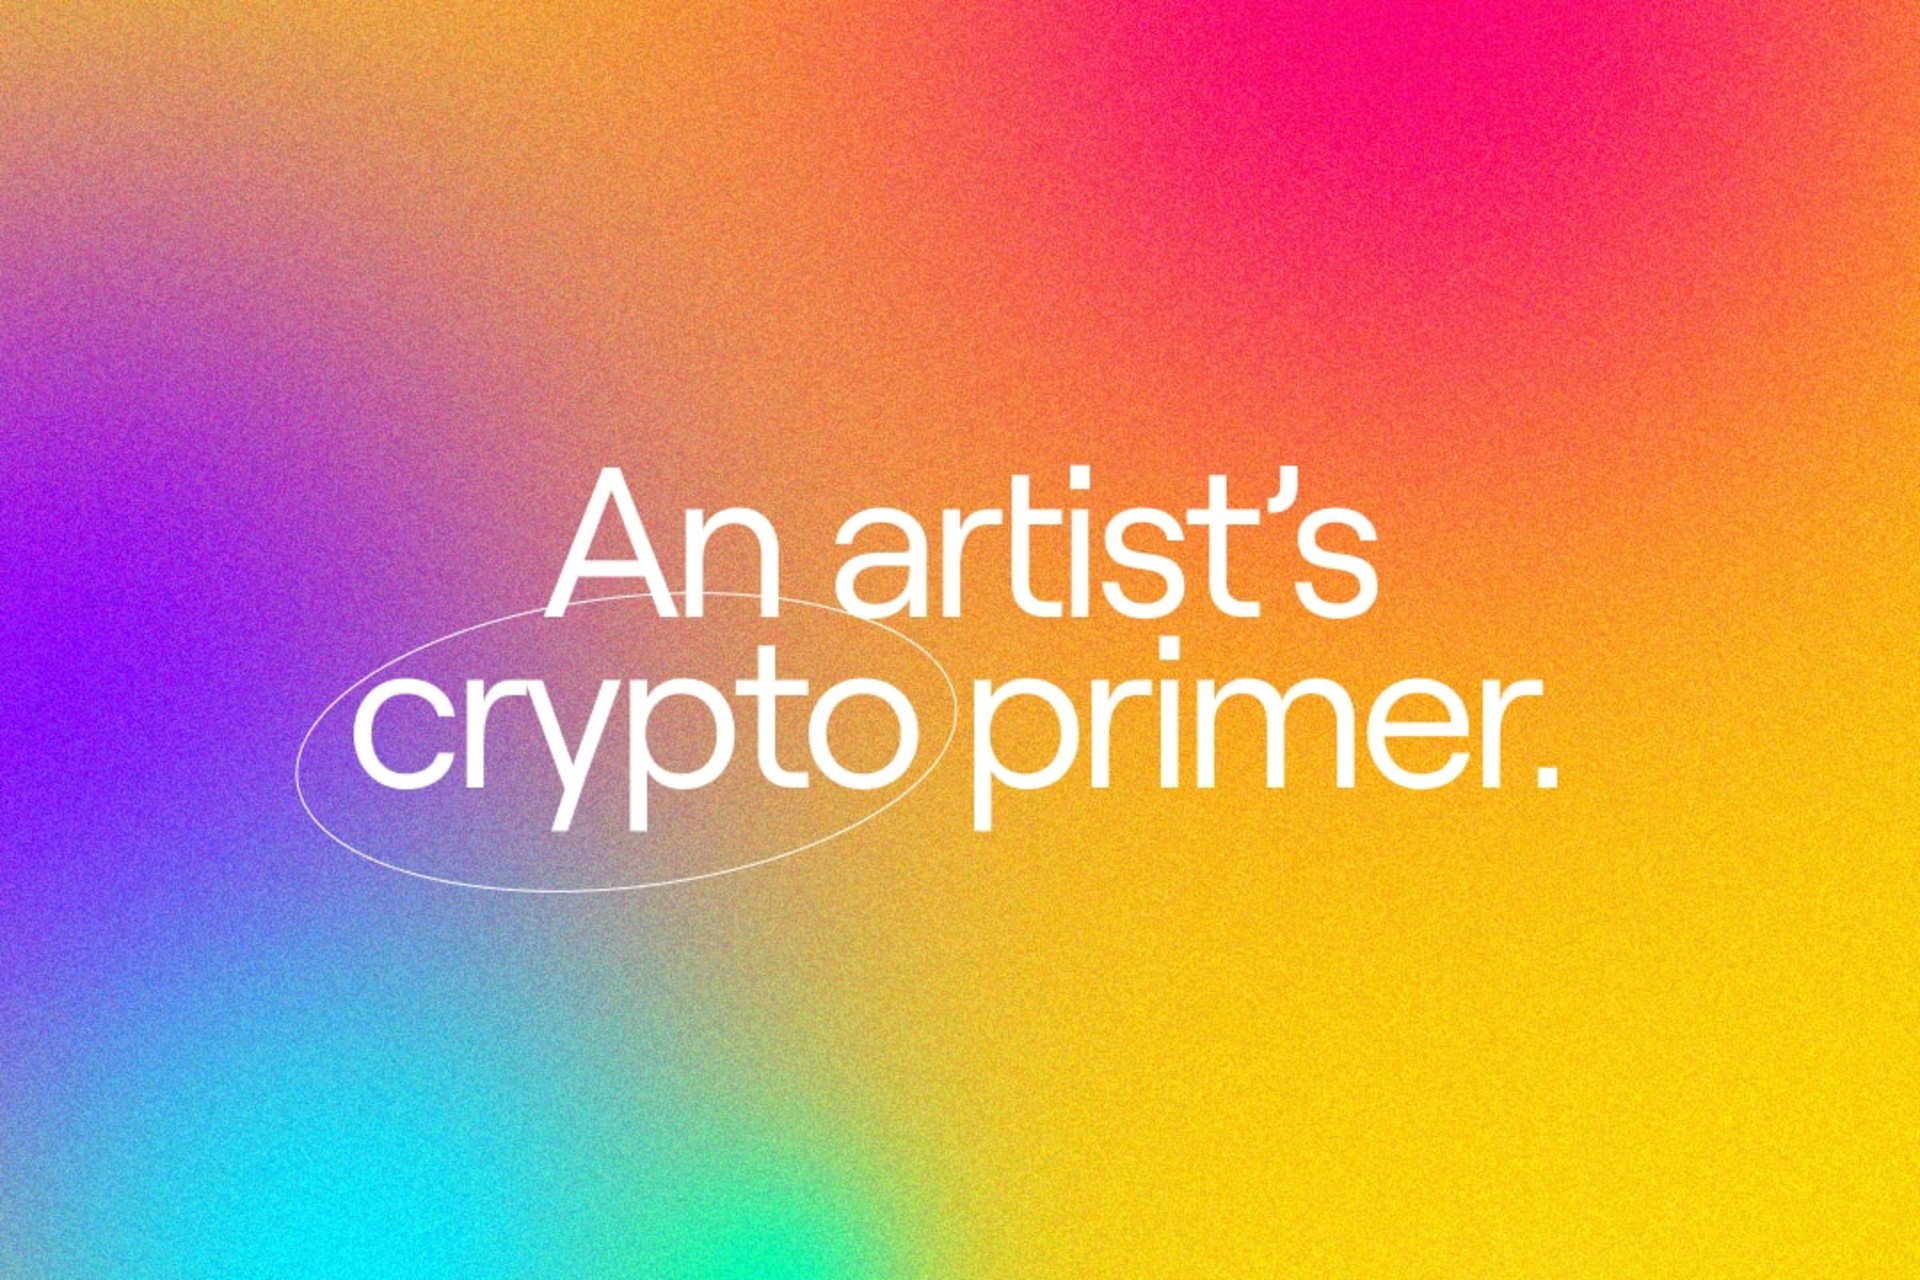 An artist’s crypto primer